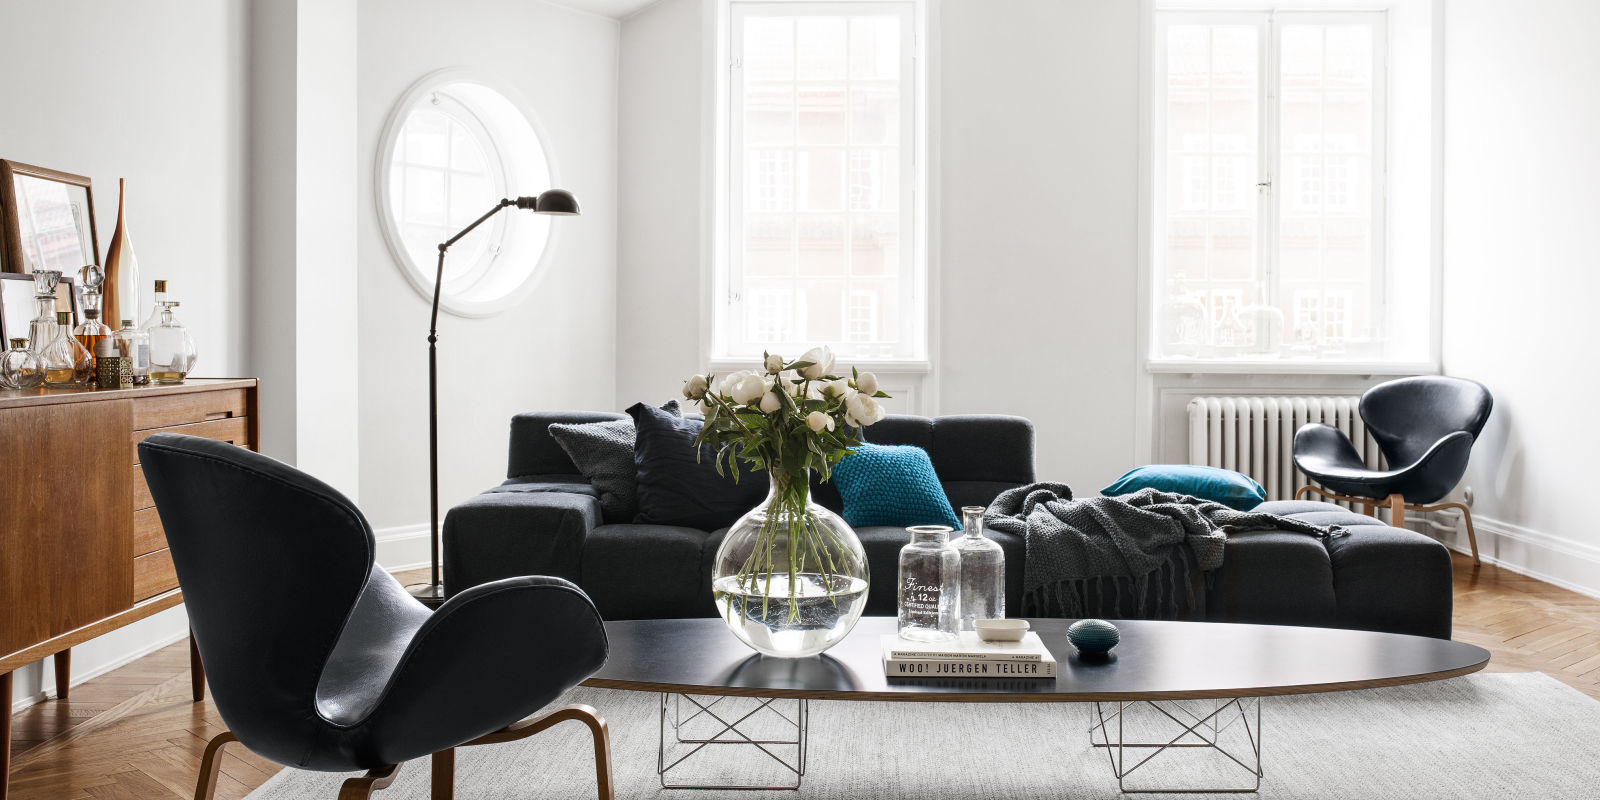 delikatissen sillones Swan de Arne Jacobsen muebles eames aalto muebles de diseño mid centruy modern H&M Home estilo nórdico Elliptical Table ETR Charles & Ray Eames aparador danés 